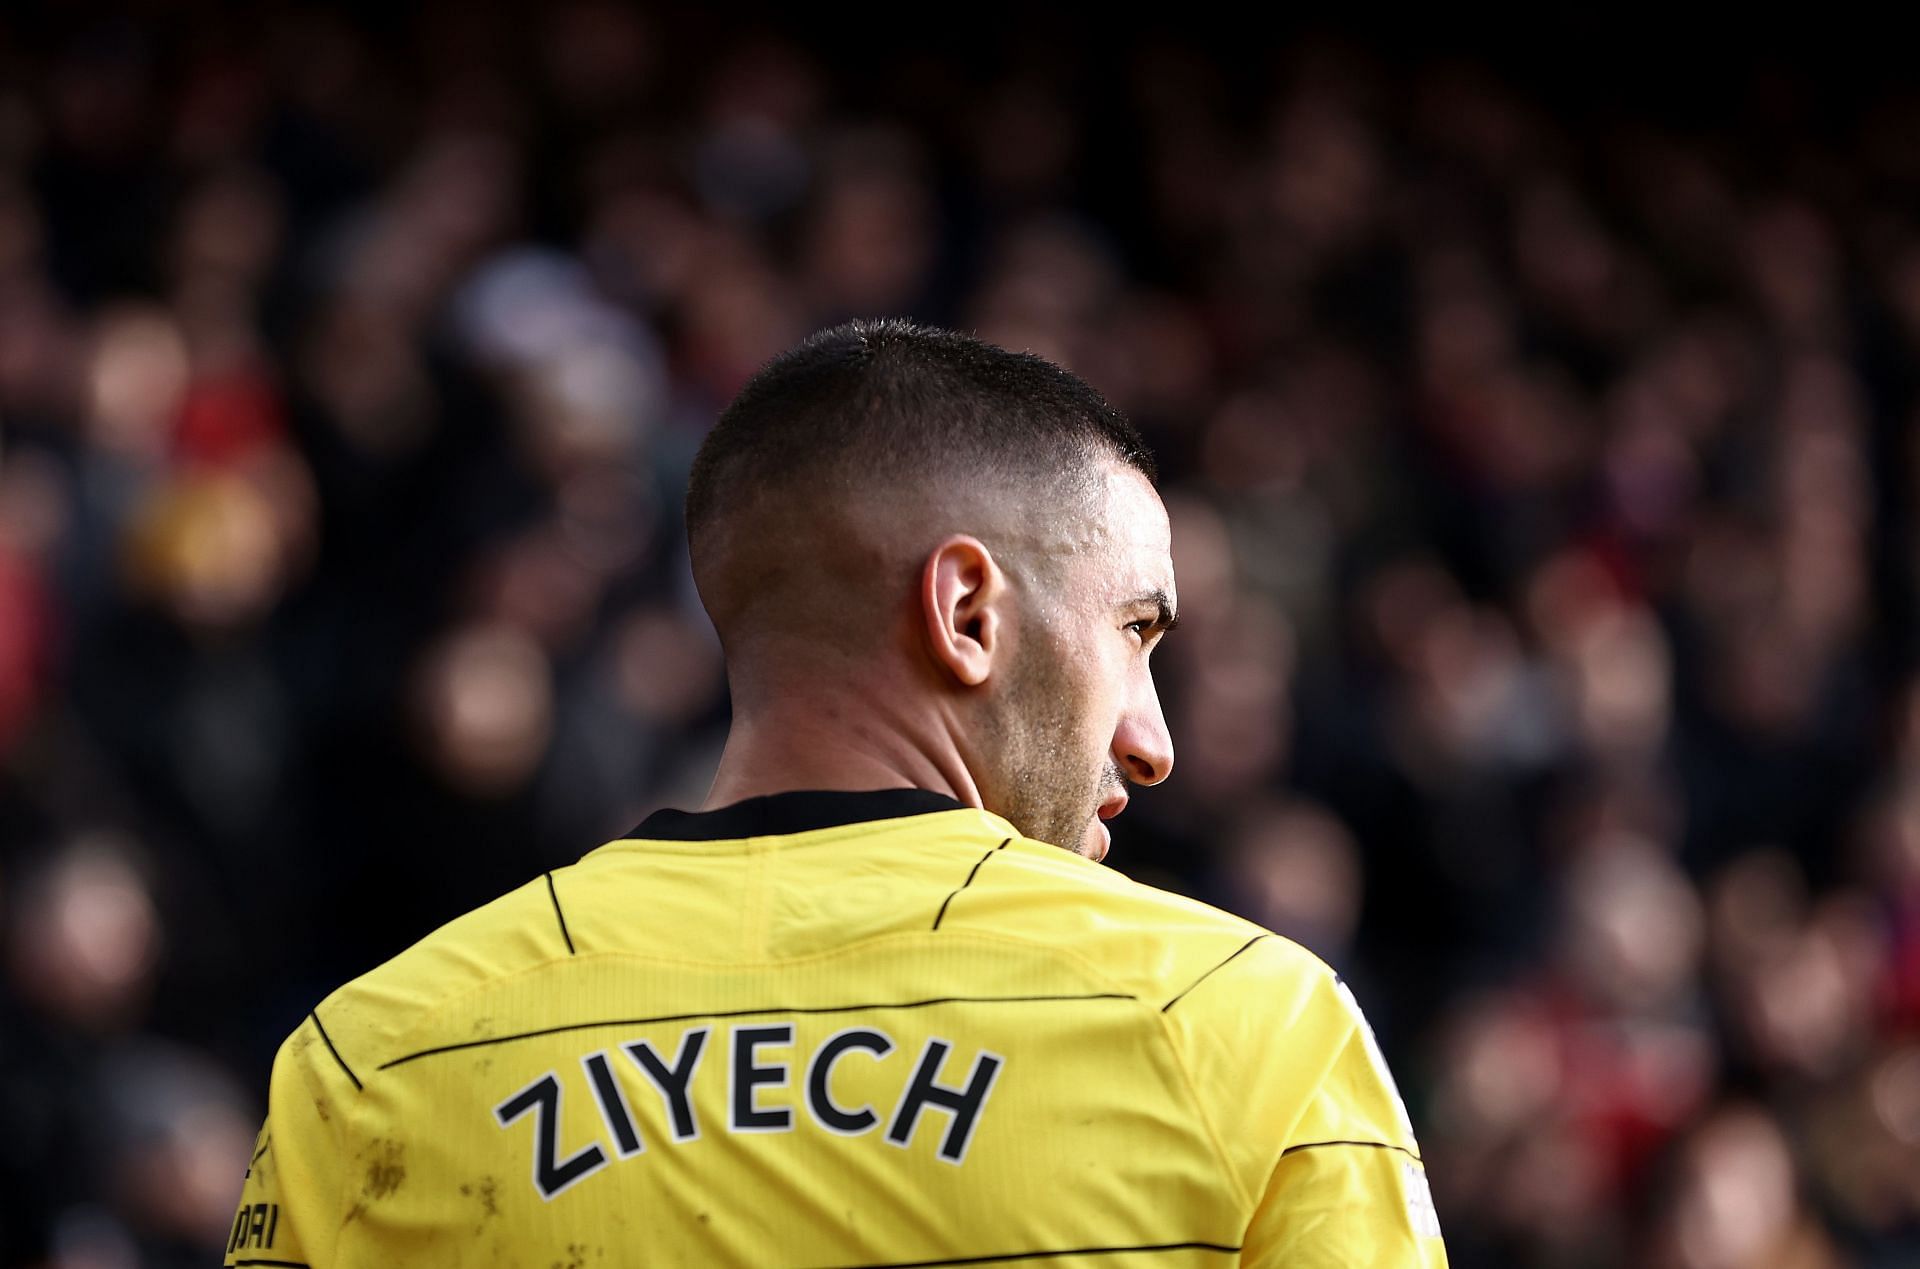 Ziyech scored eight goals last season